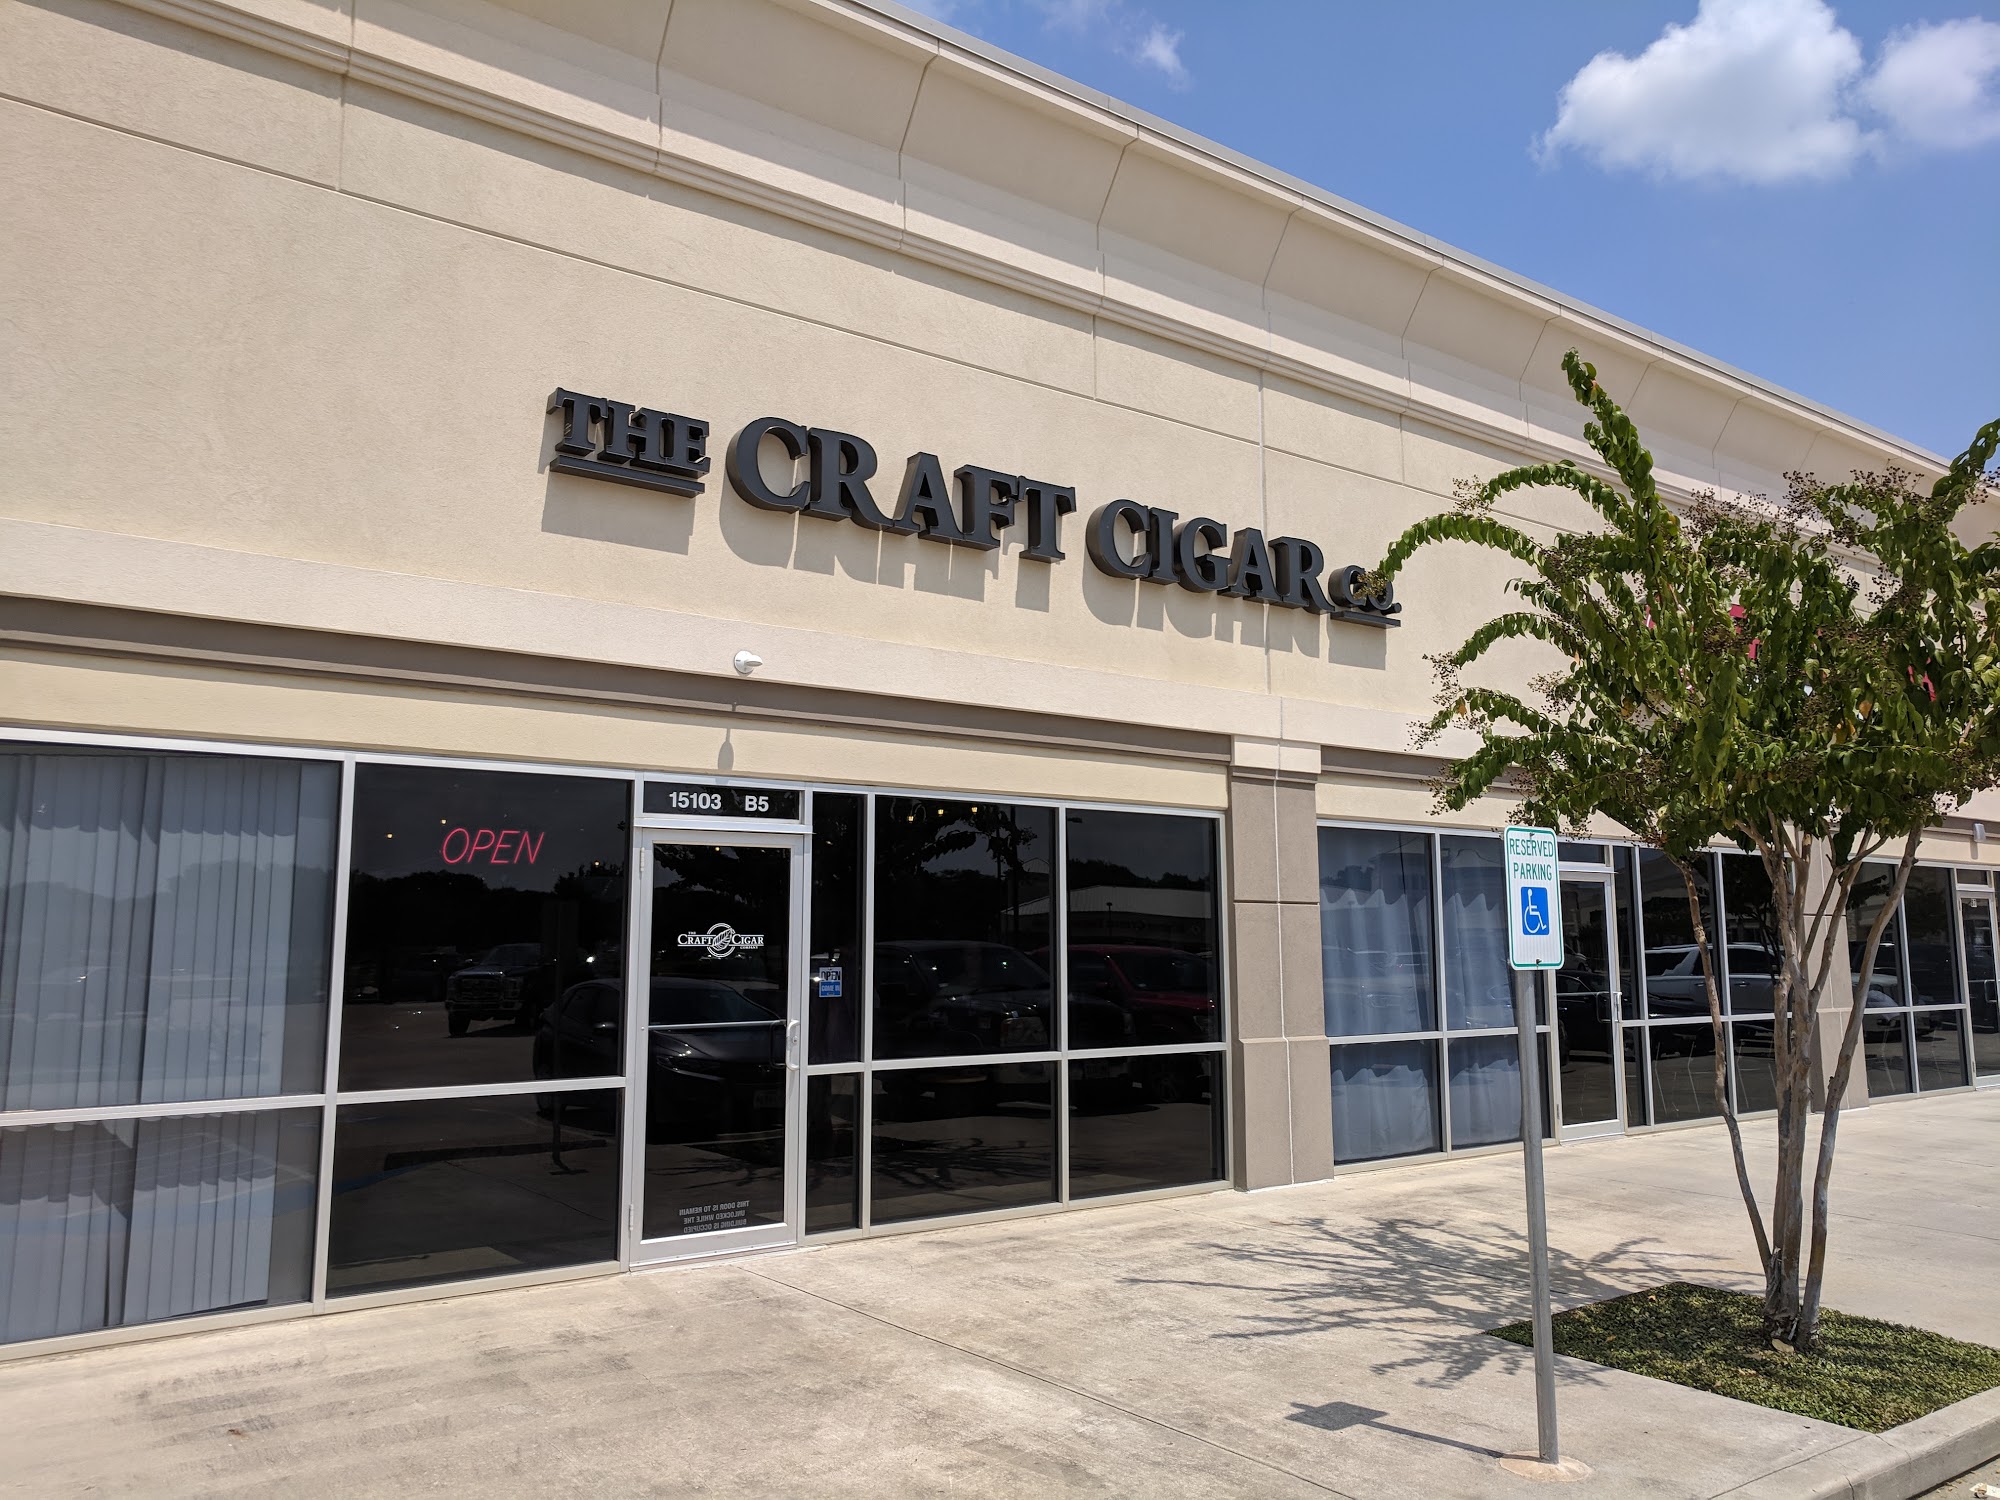 The Craft Cigar Company